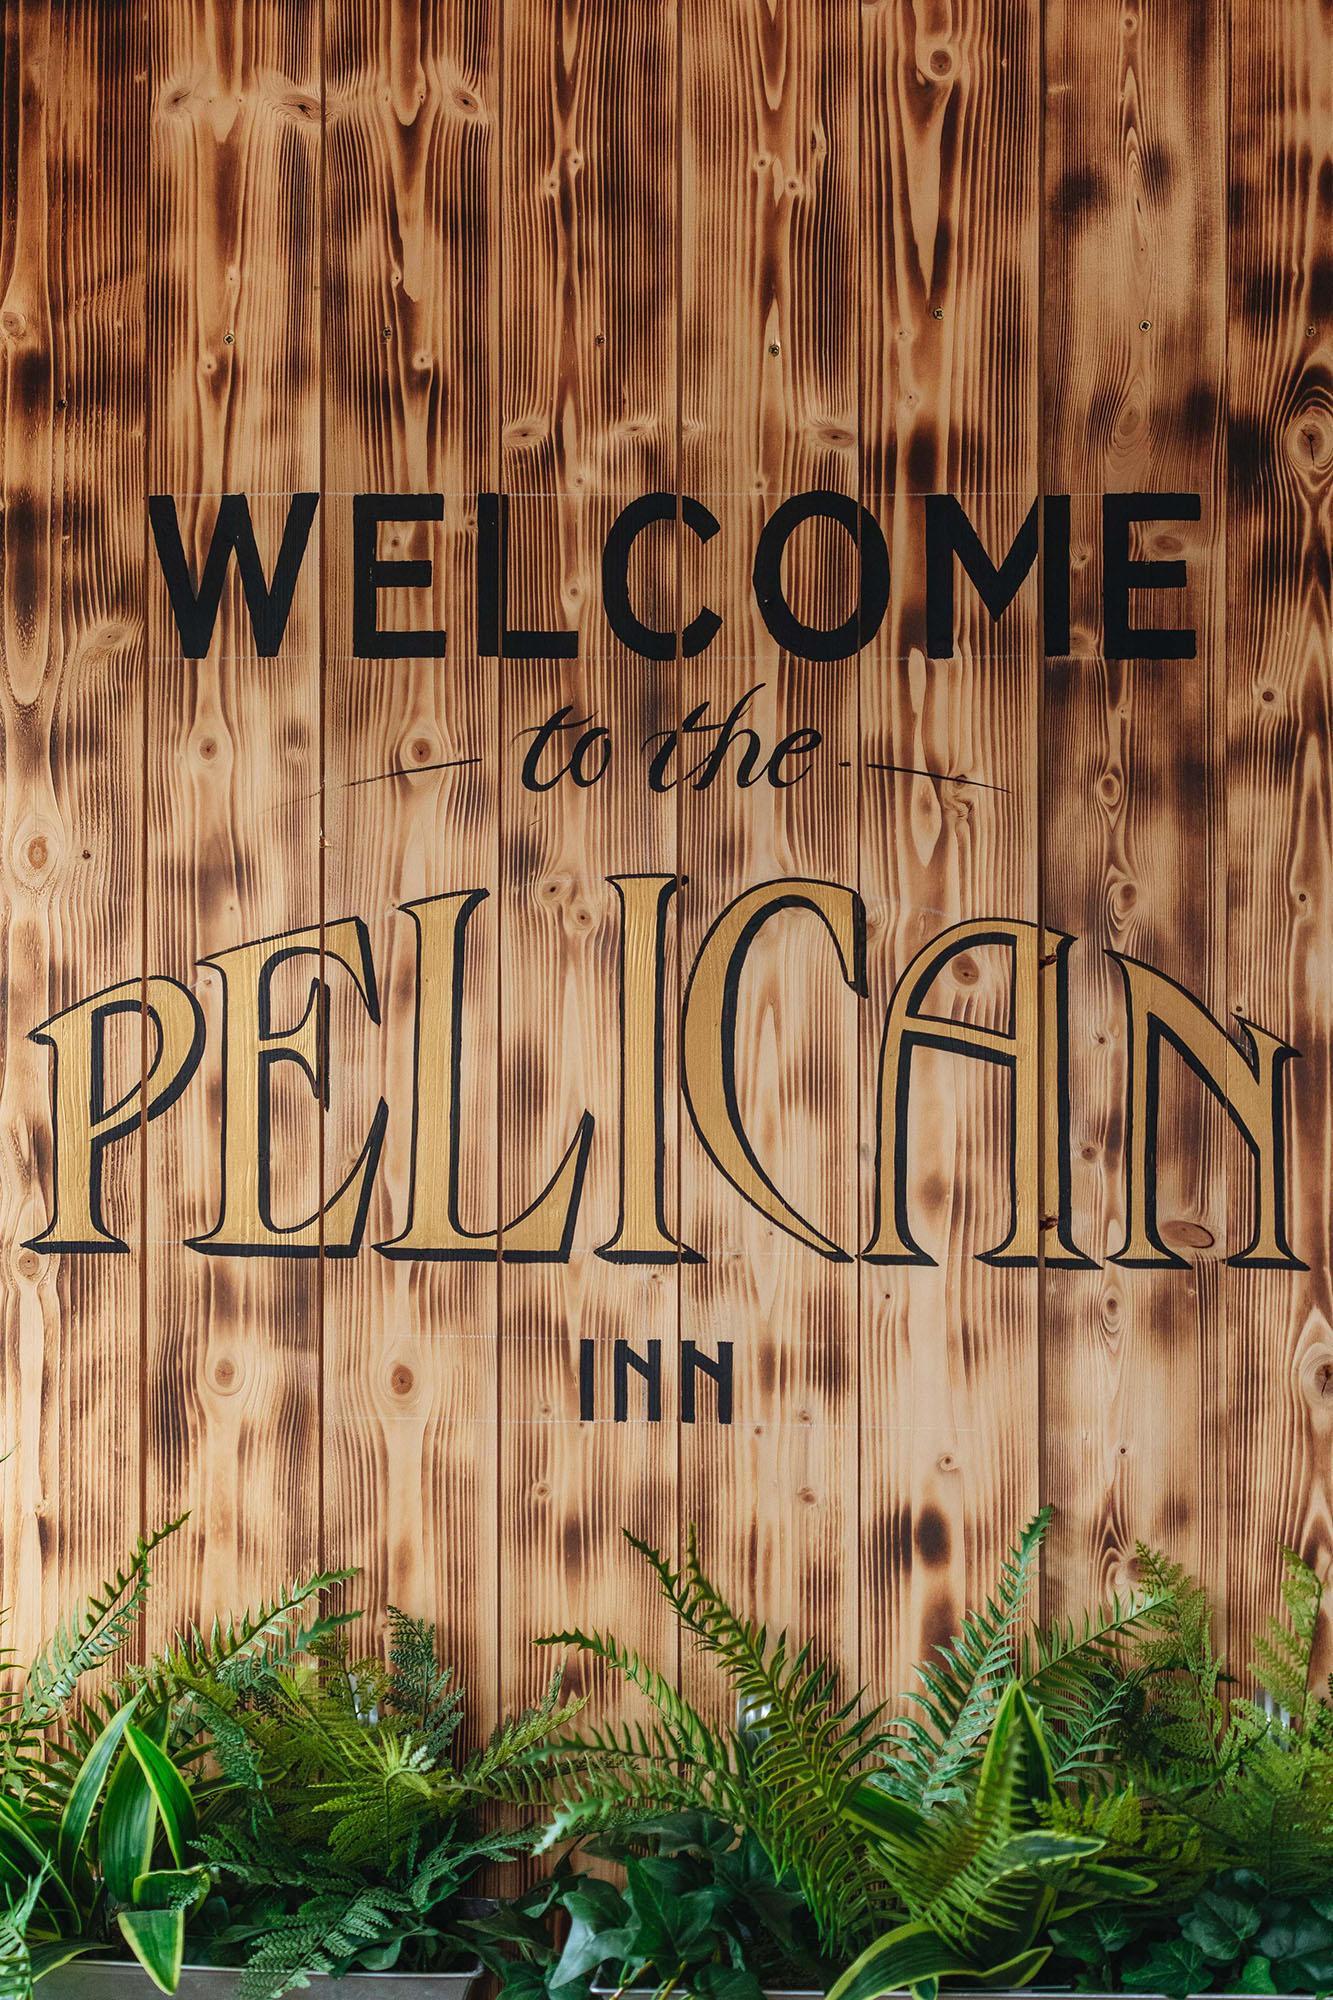 Images Pelican Inn